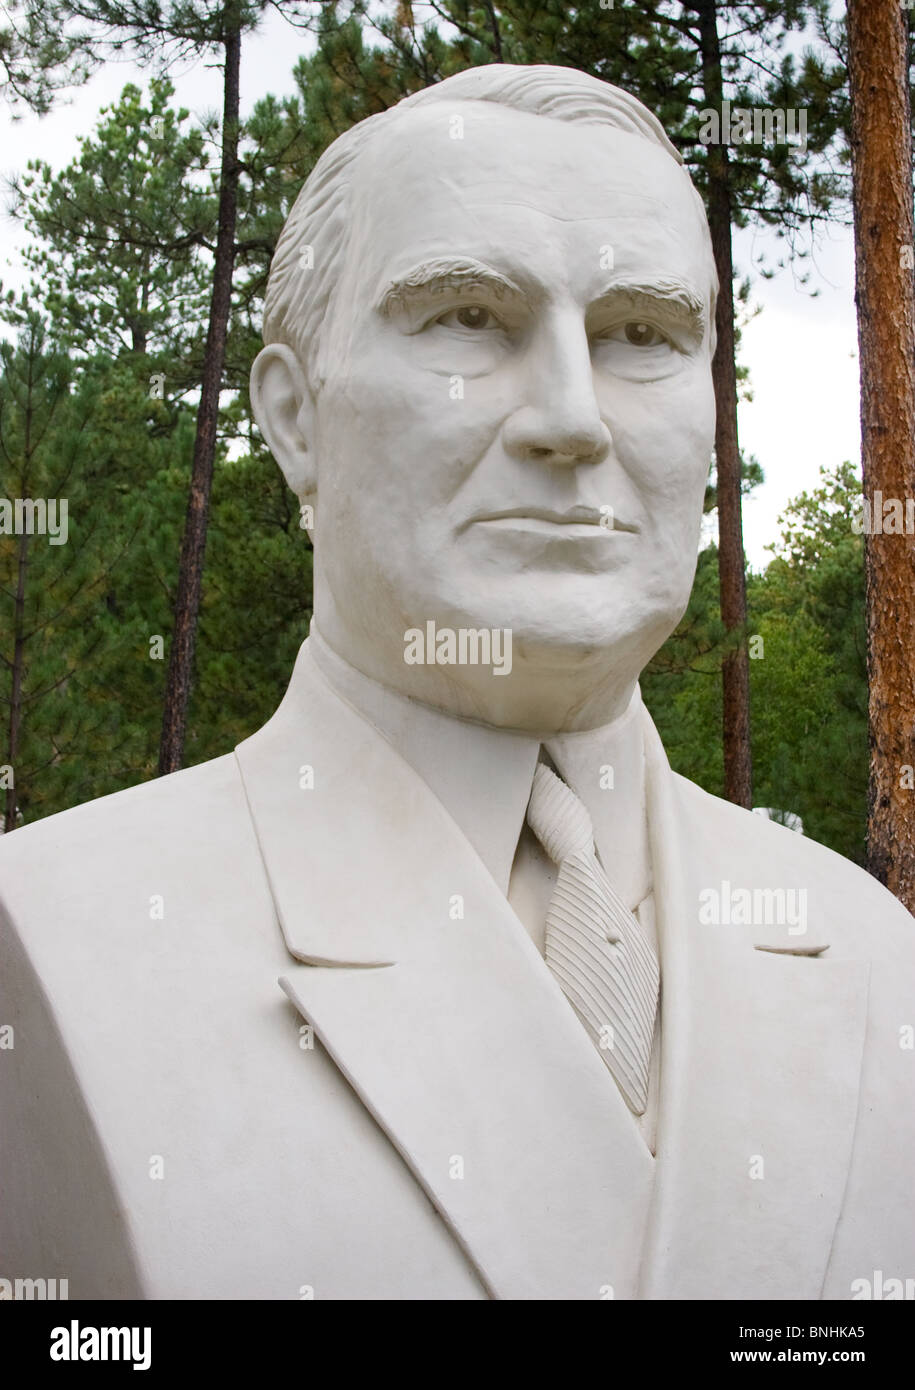 Warren G. Harding bust by sculptor David Adickes at Presidents Park in Lead South Dakota Stock Photo